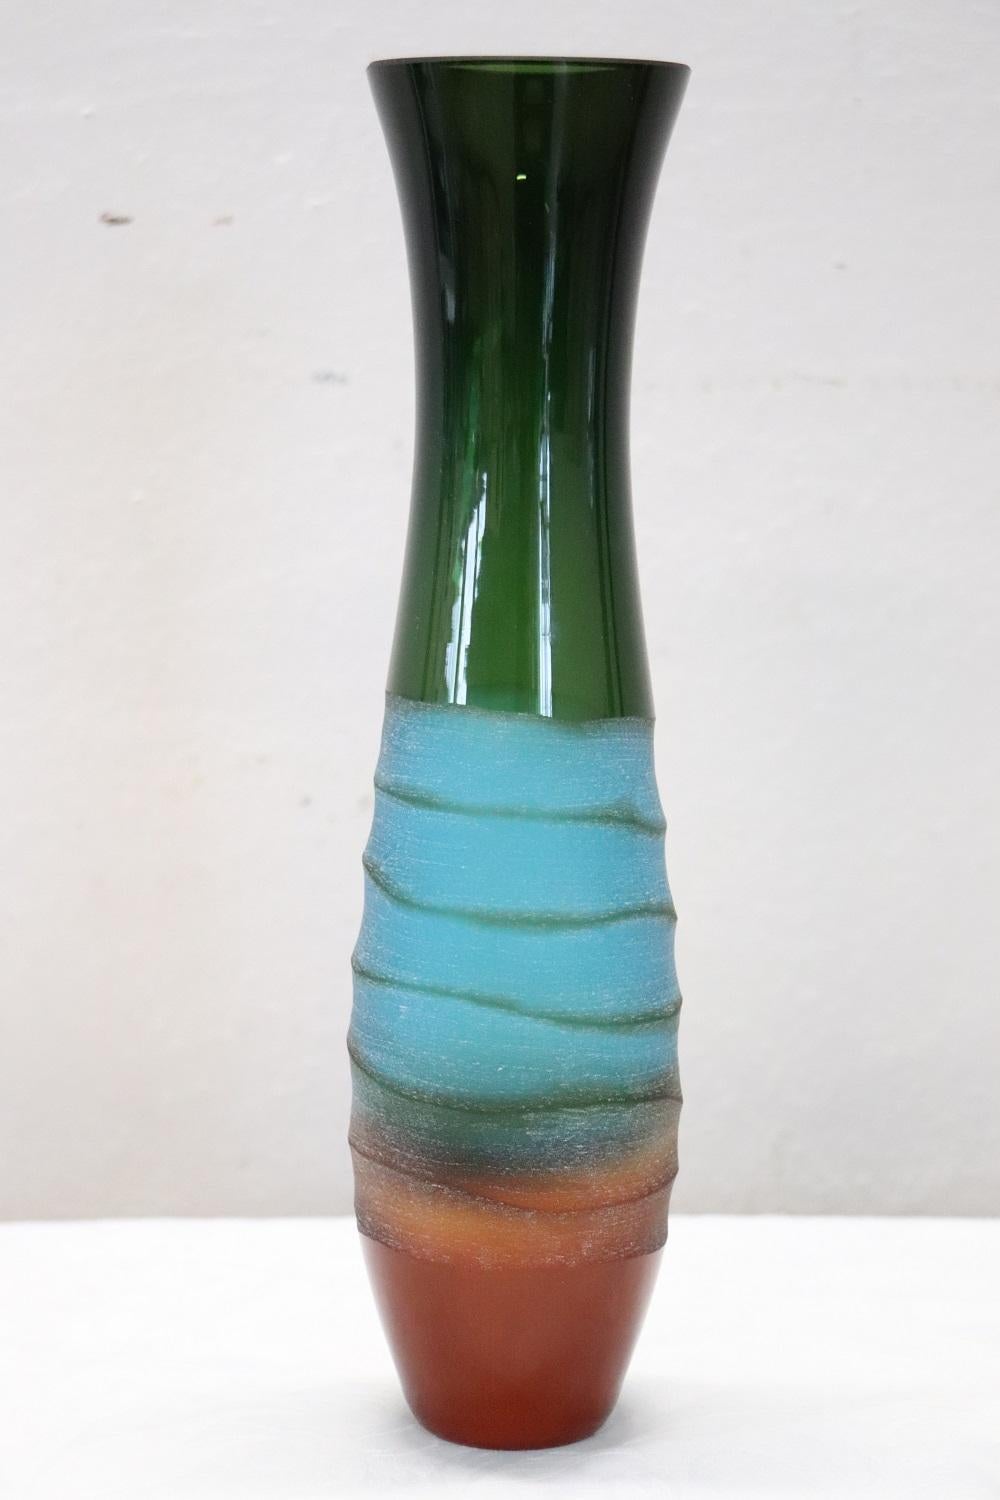 villeroy and boch glass vase